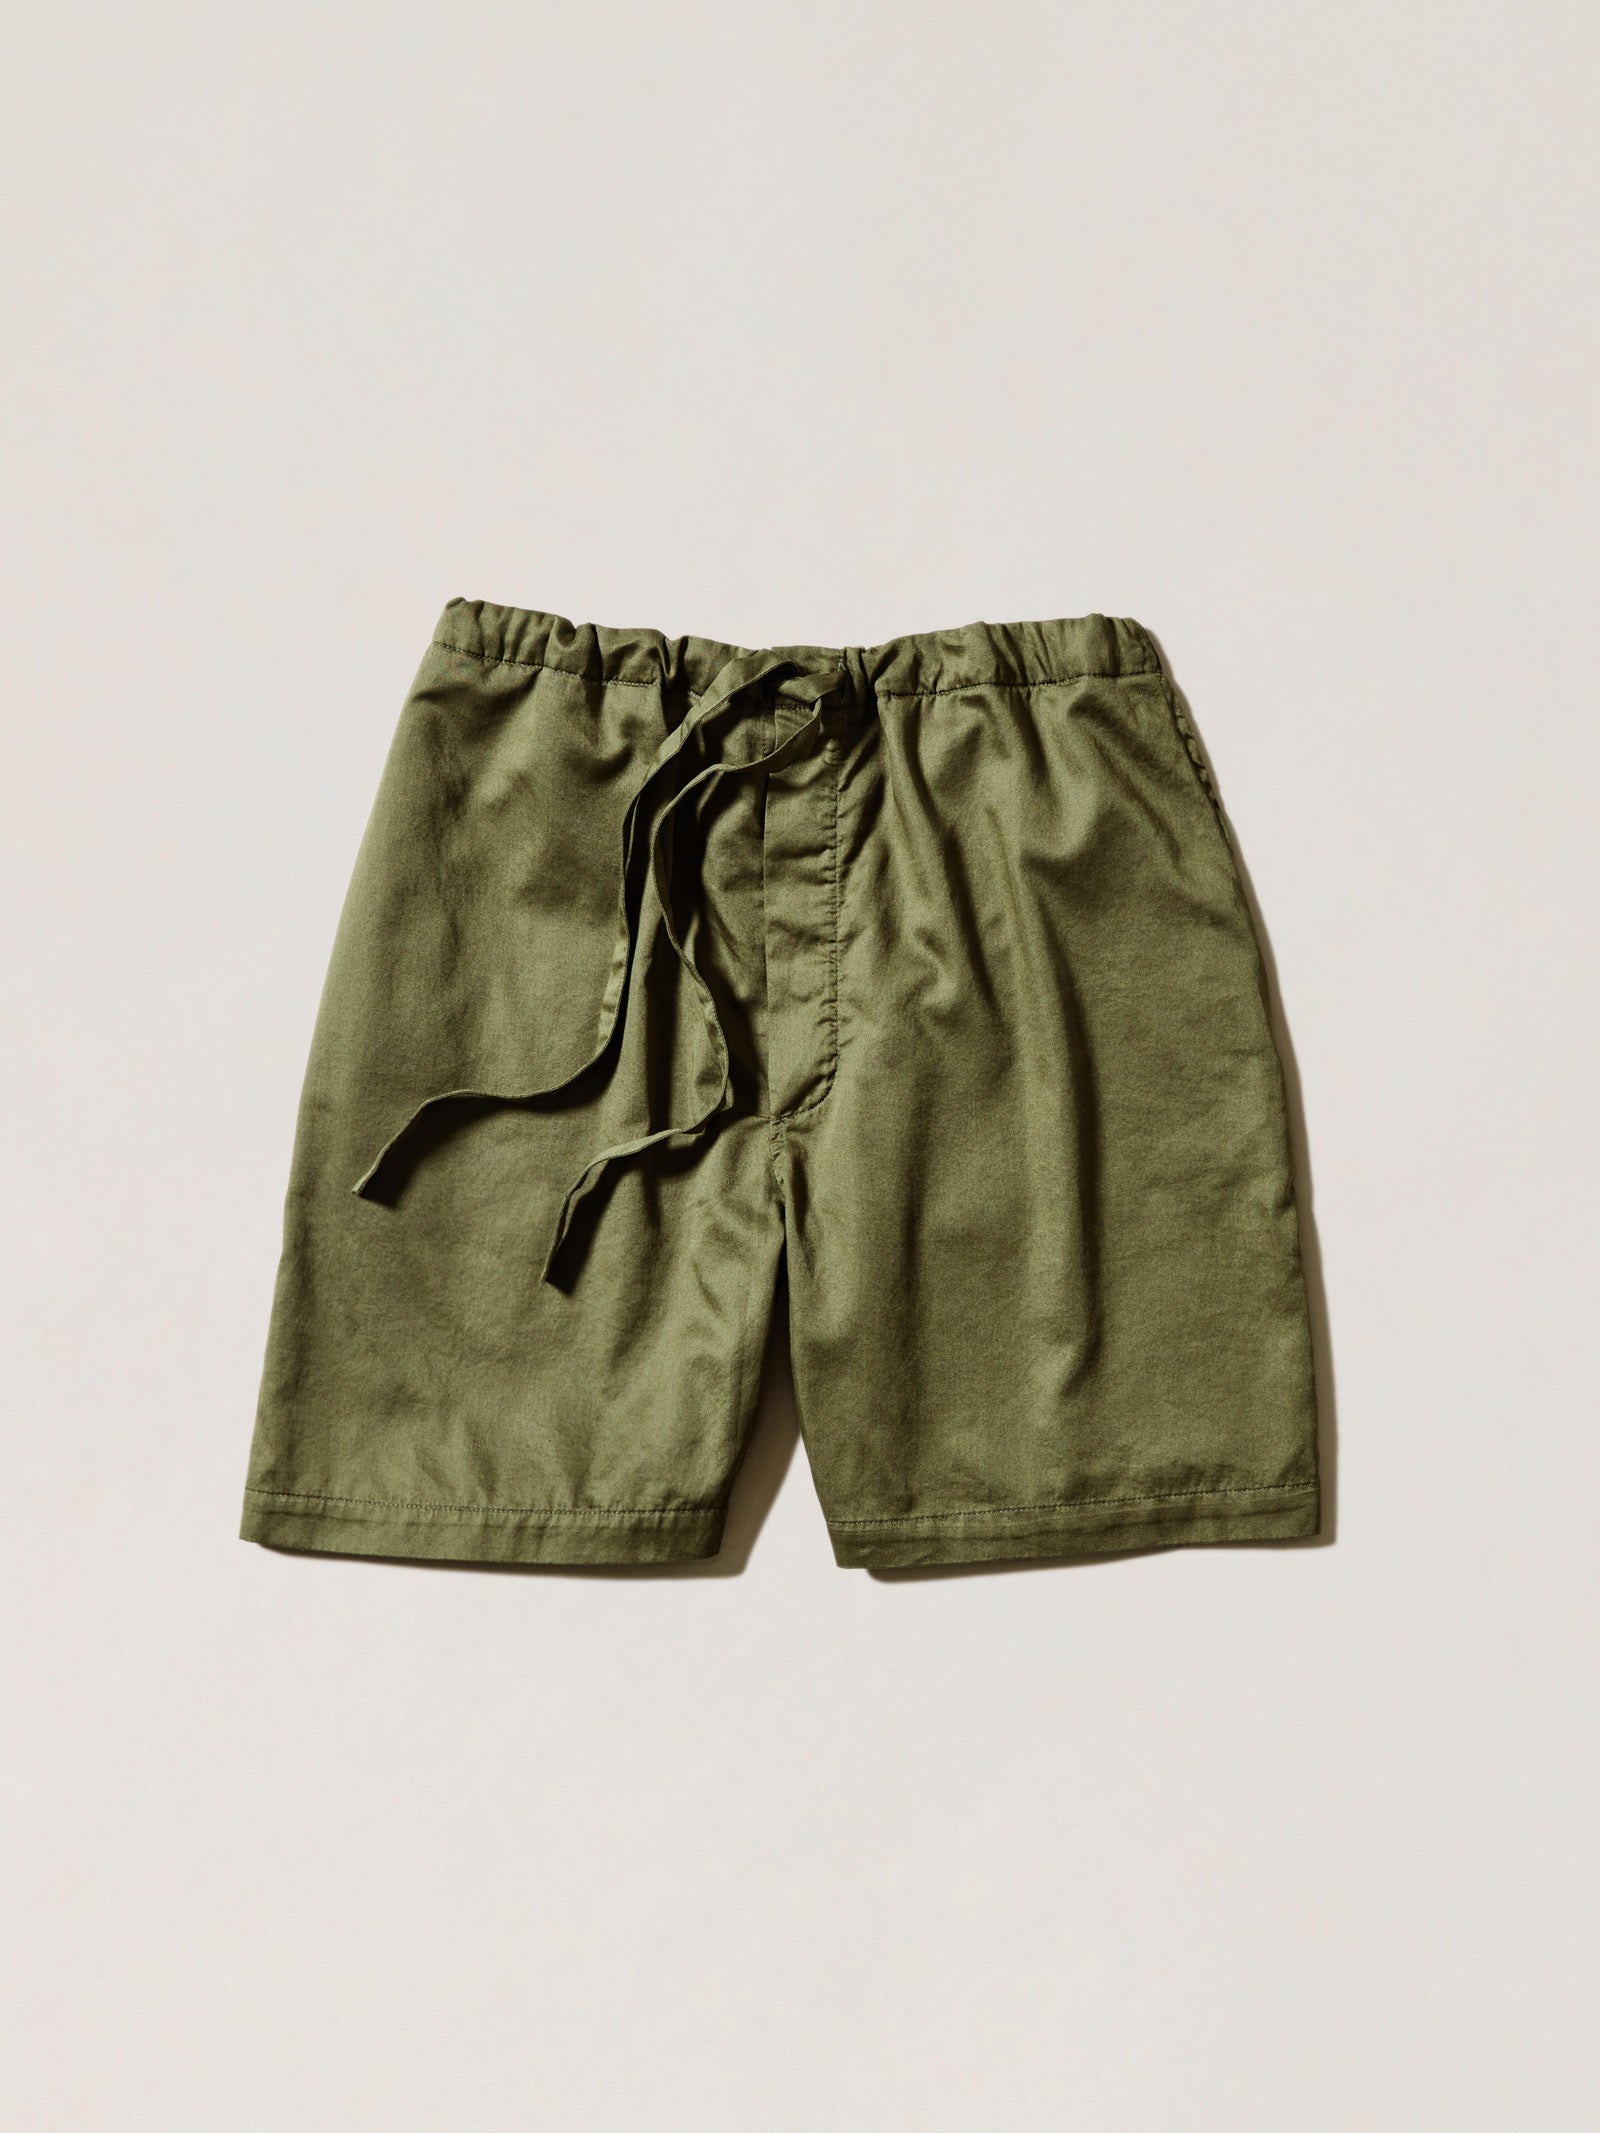 100% cotton pyjama shorts, khaki drawstring waist lounge shorts